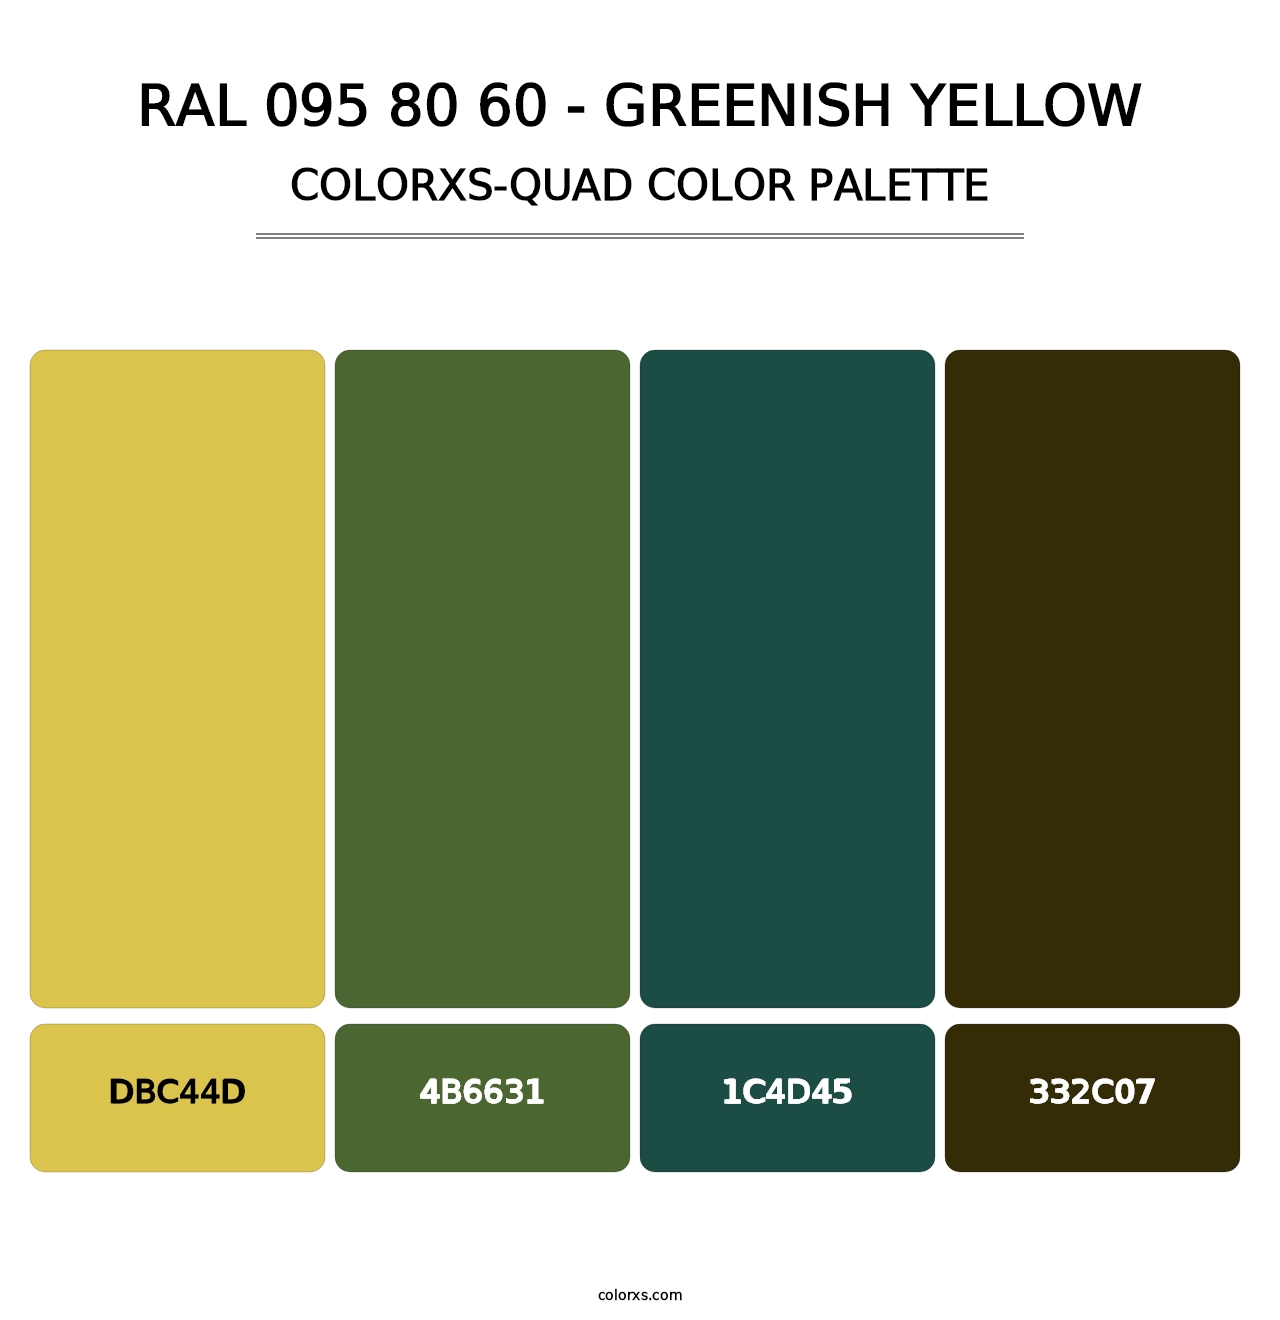 RAL 095 80 60 - Greenish Yellow - Colorxs Quad Palette